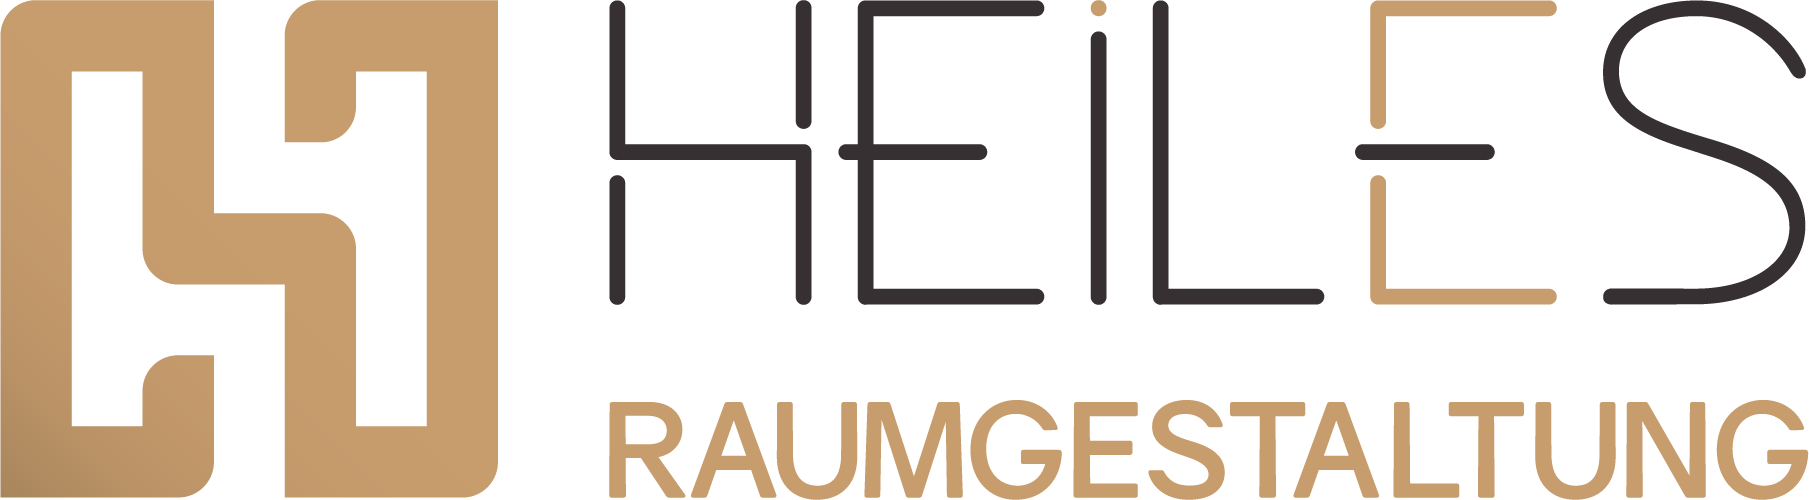 Heiles raumgestaltung logo